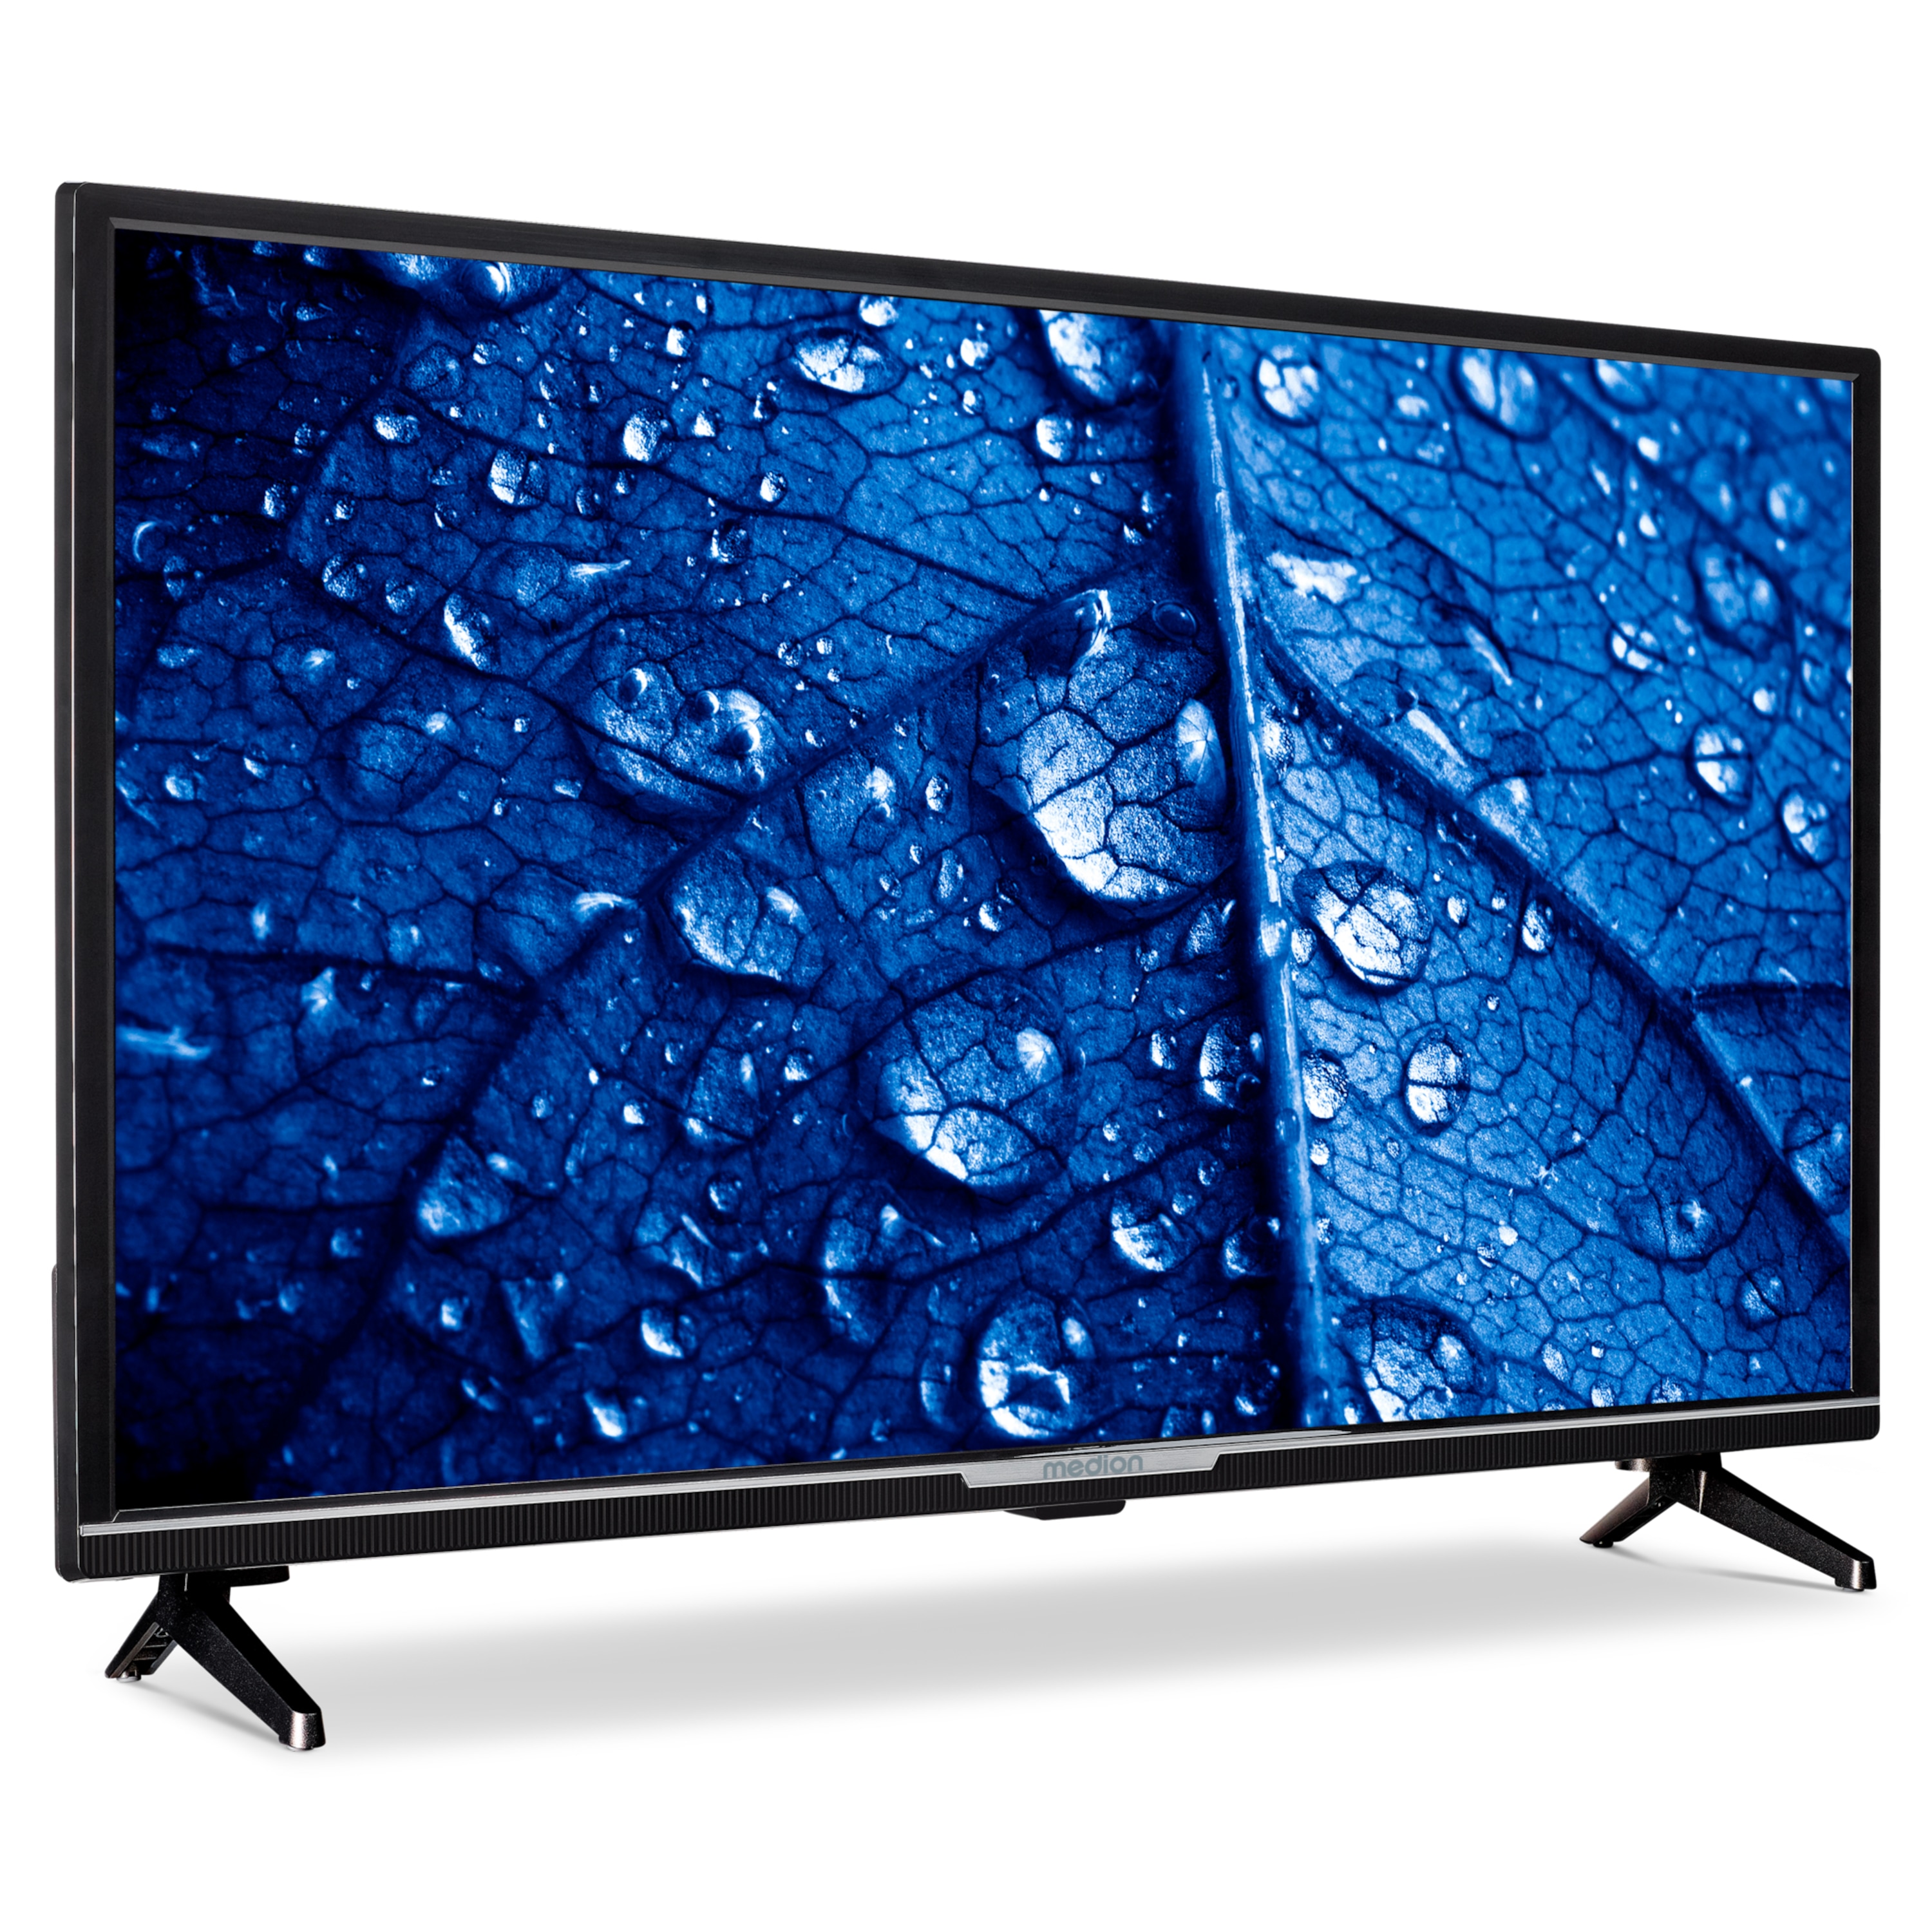 MEDION® LIFE® P13207 (MD 30018) Smart-TV, 80 cm (32'') Full HD Display, HDR, PVR ready, Bluetooth®, Netflix, Amazon Prime Video